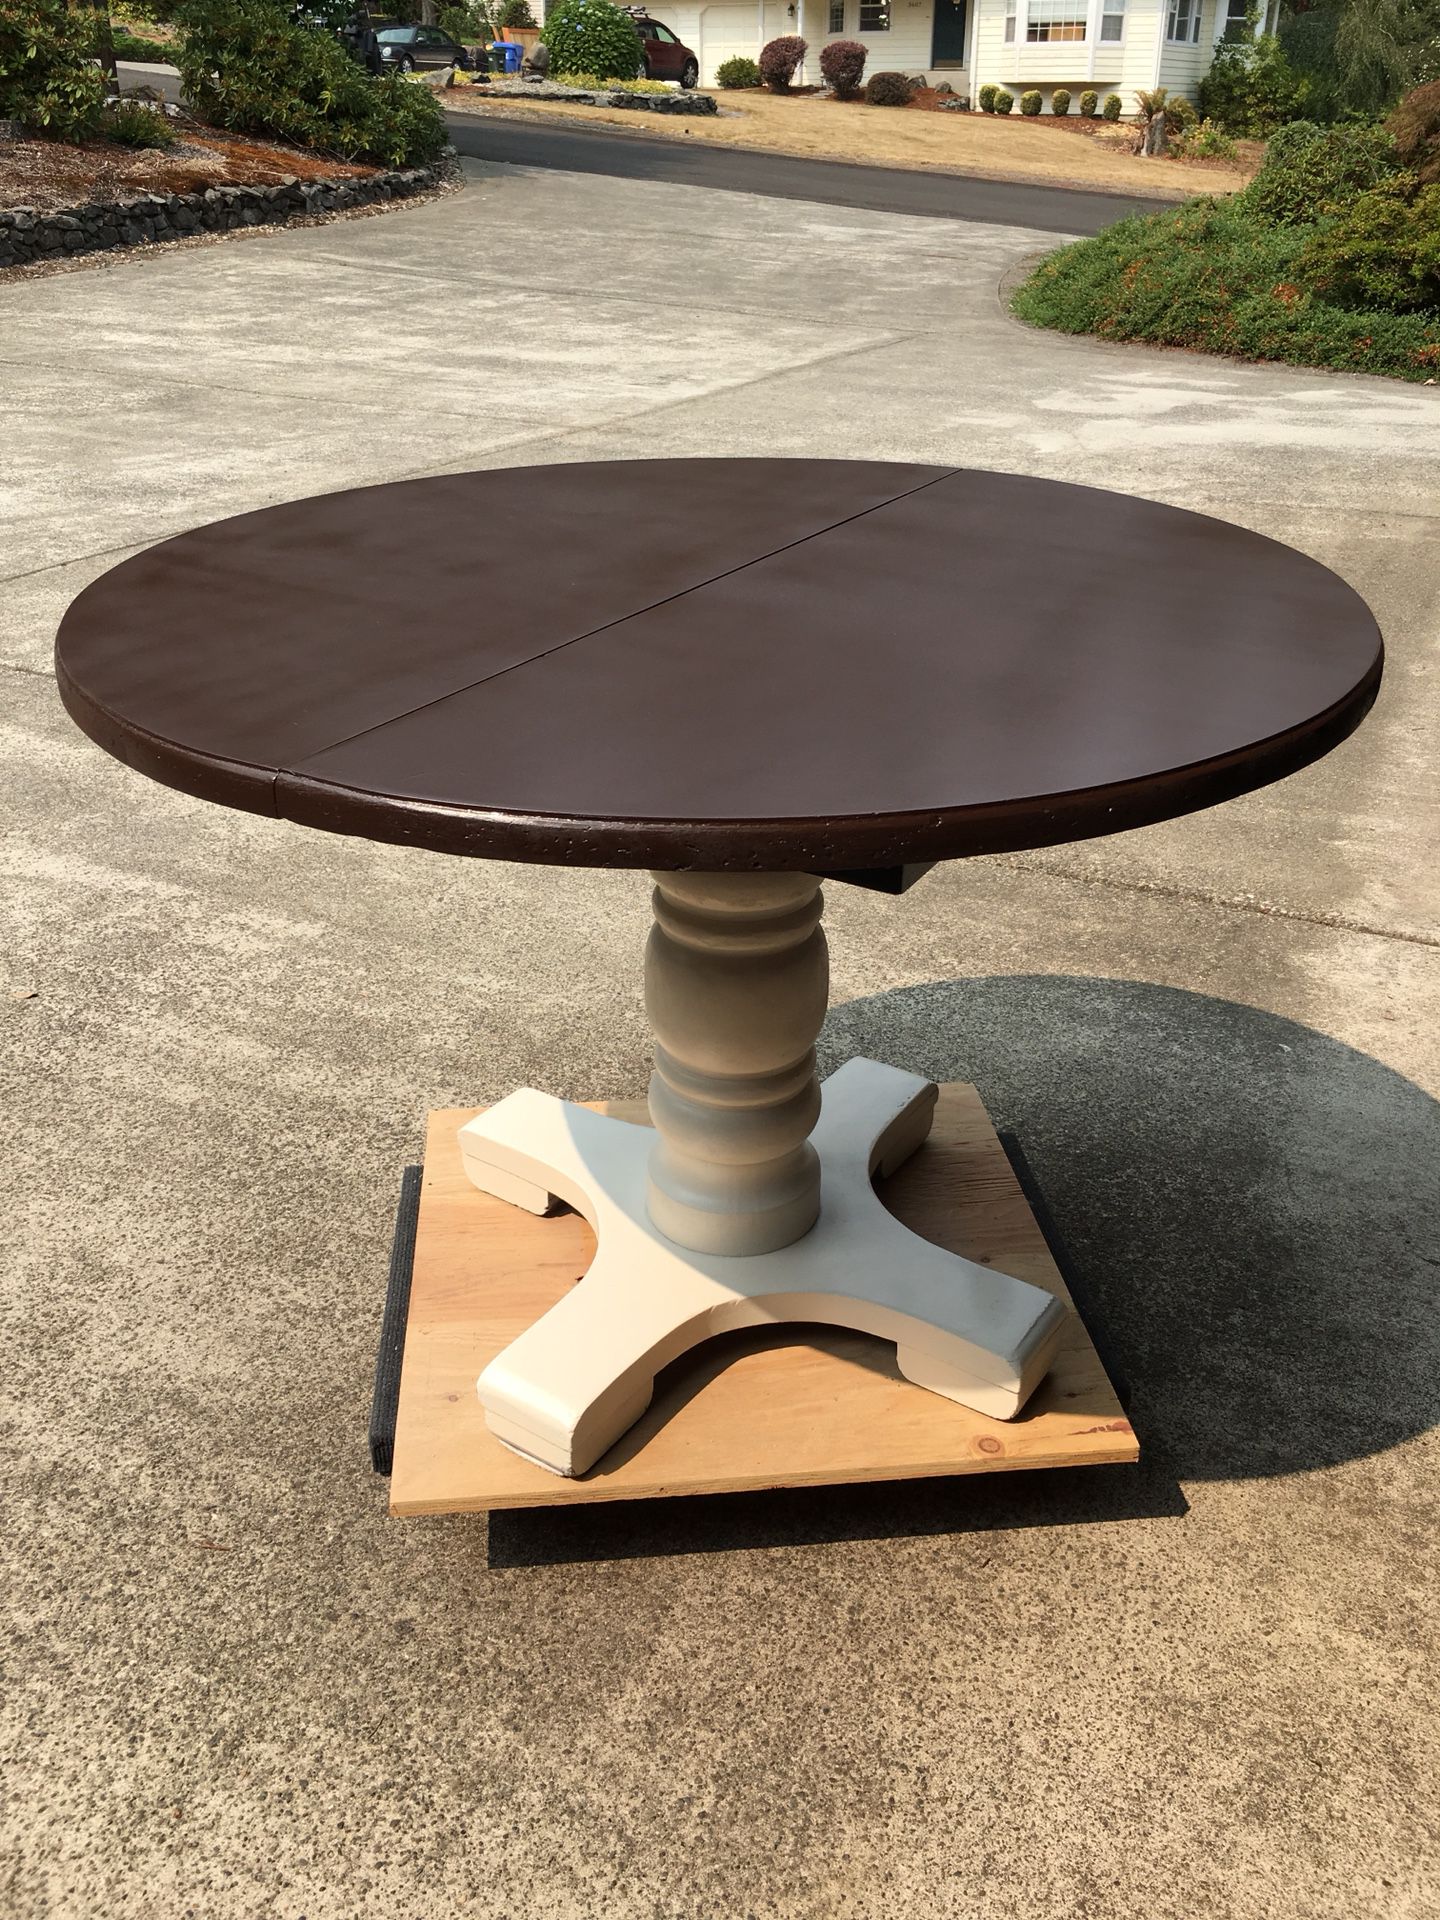 Old-school pedestal table